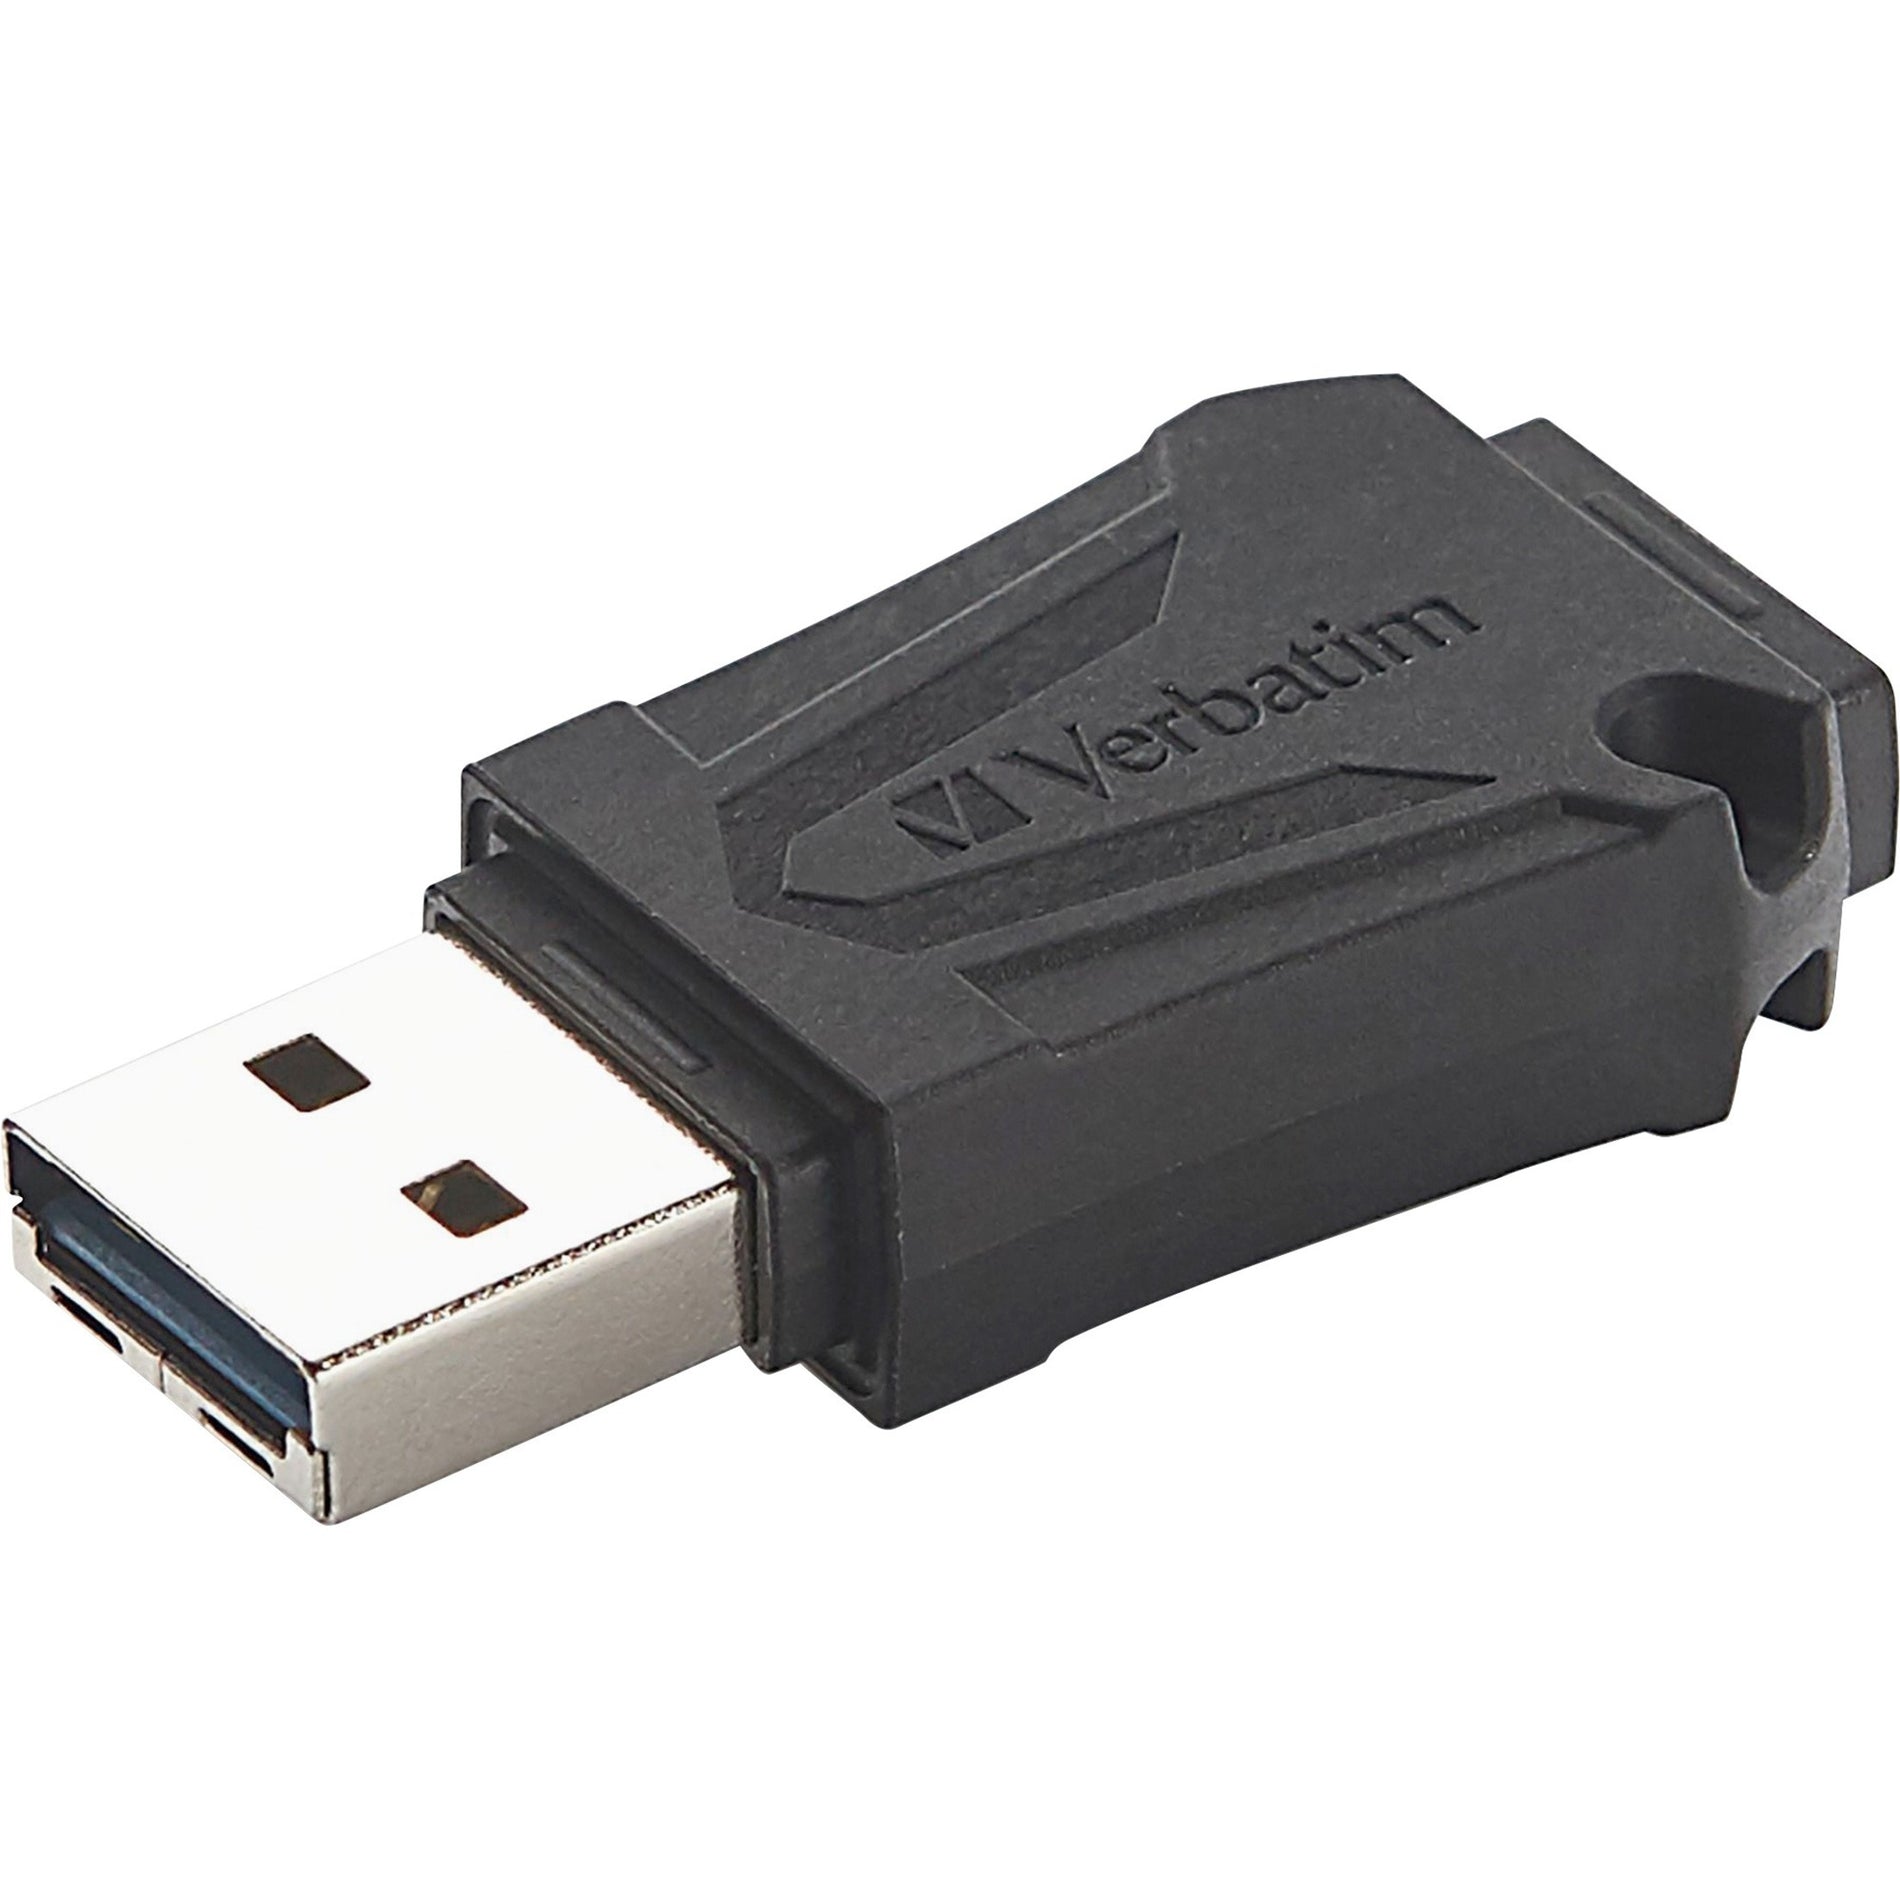 Verbatim 70000 ToughMAX 16GB USB Flash Drive, Lifetime Warranty, UL Listed Certification